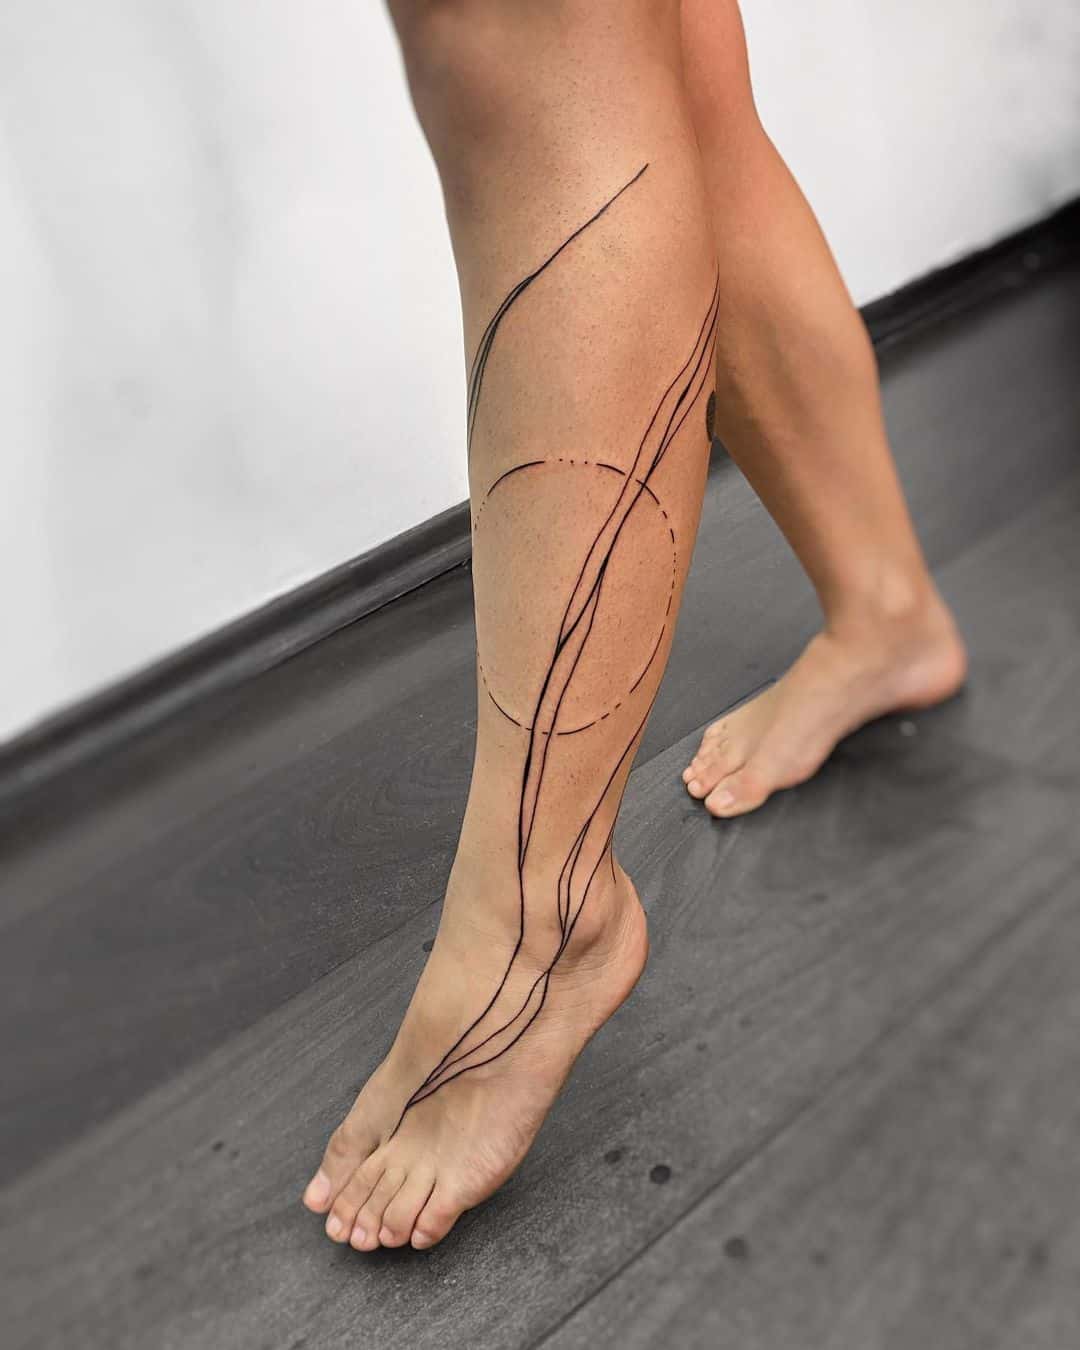 Leg tattoo by mausenbdim